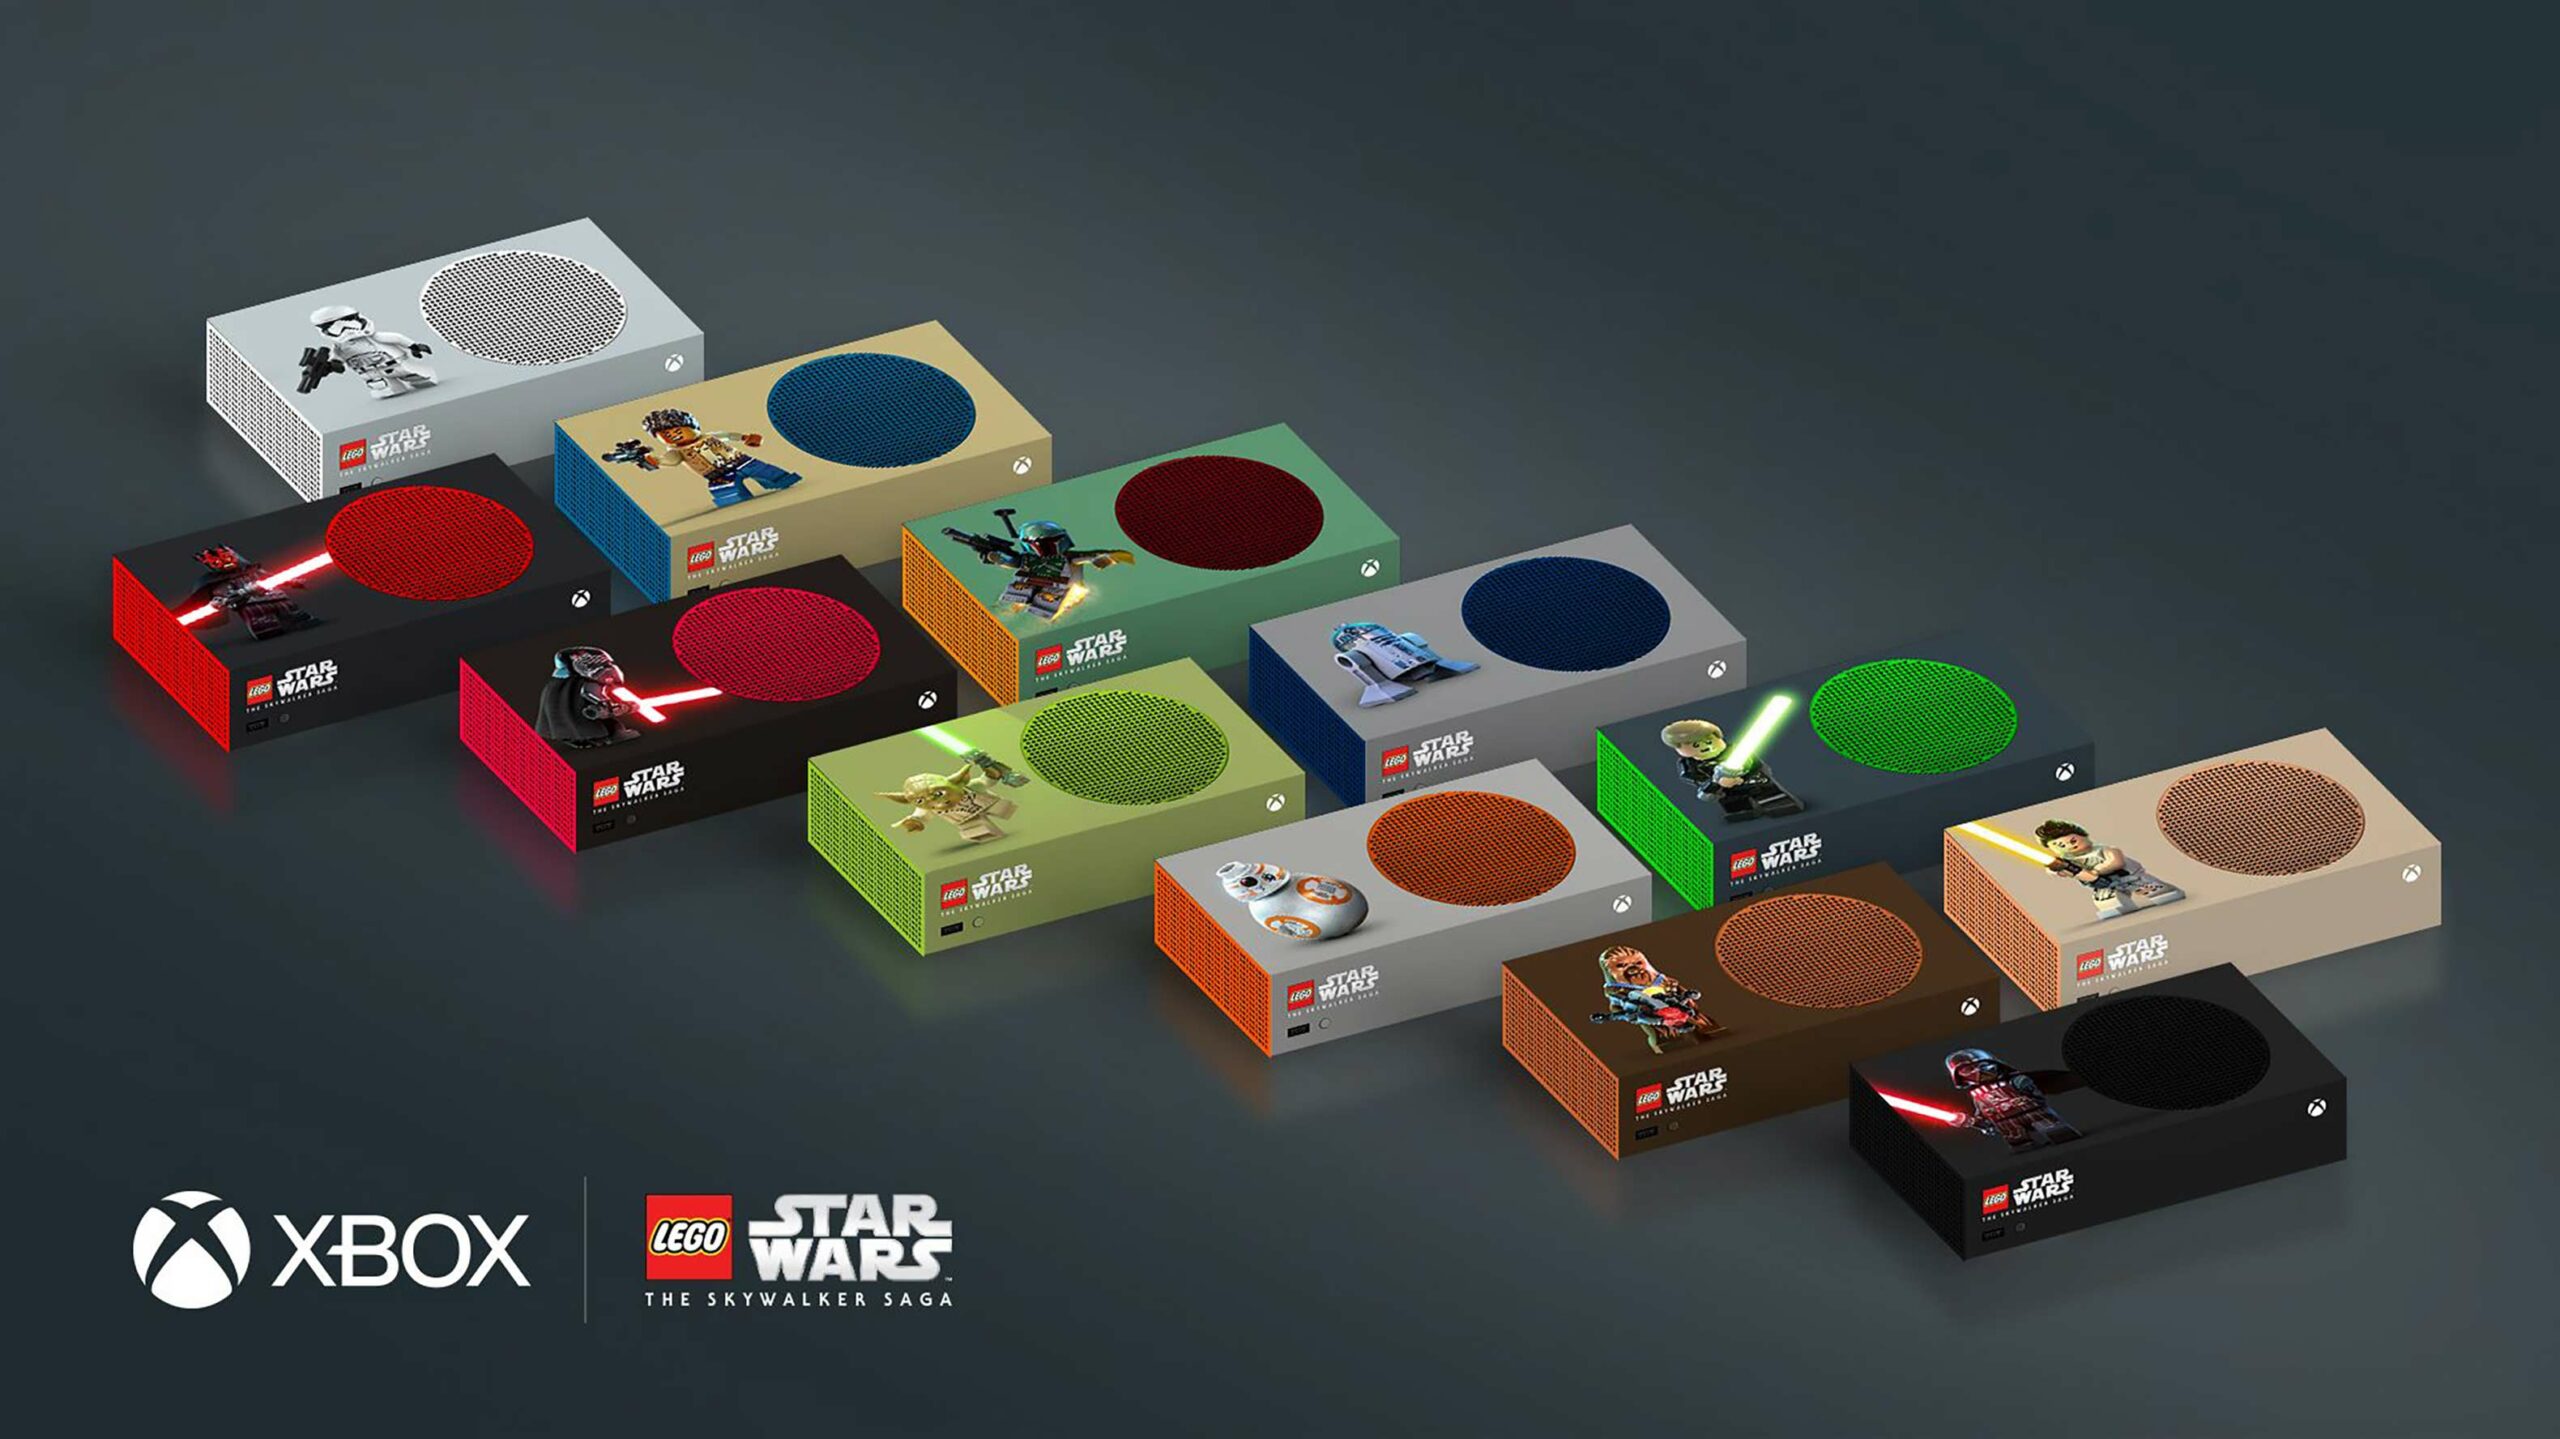 Lego Star Wars Xbox consoles